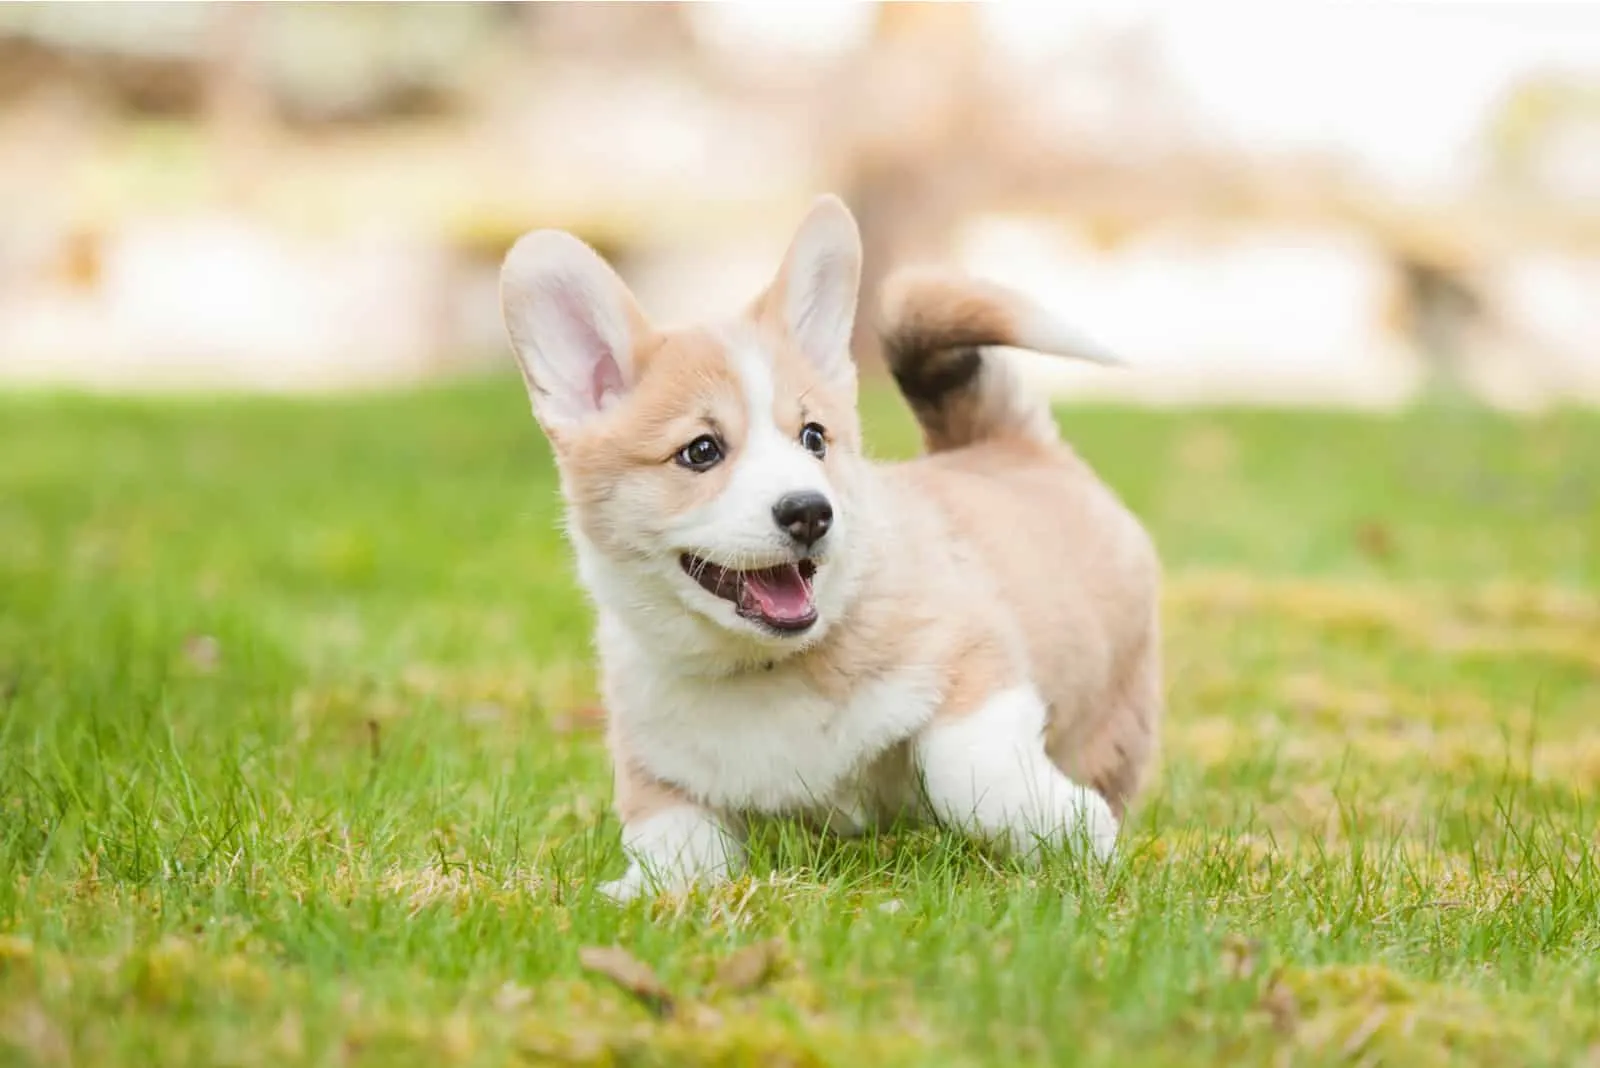 corgi puppy playing on grass